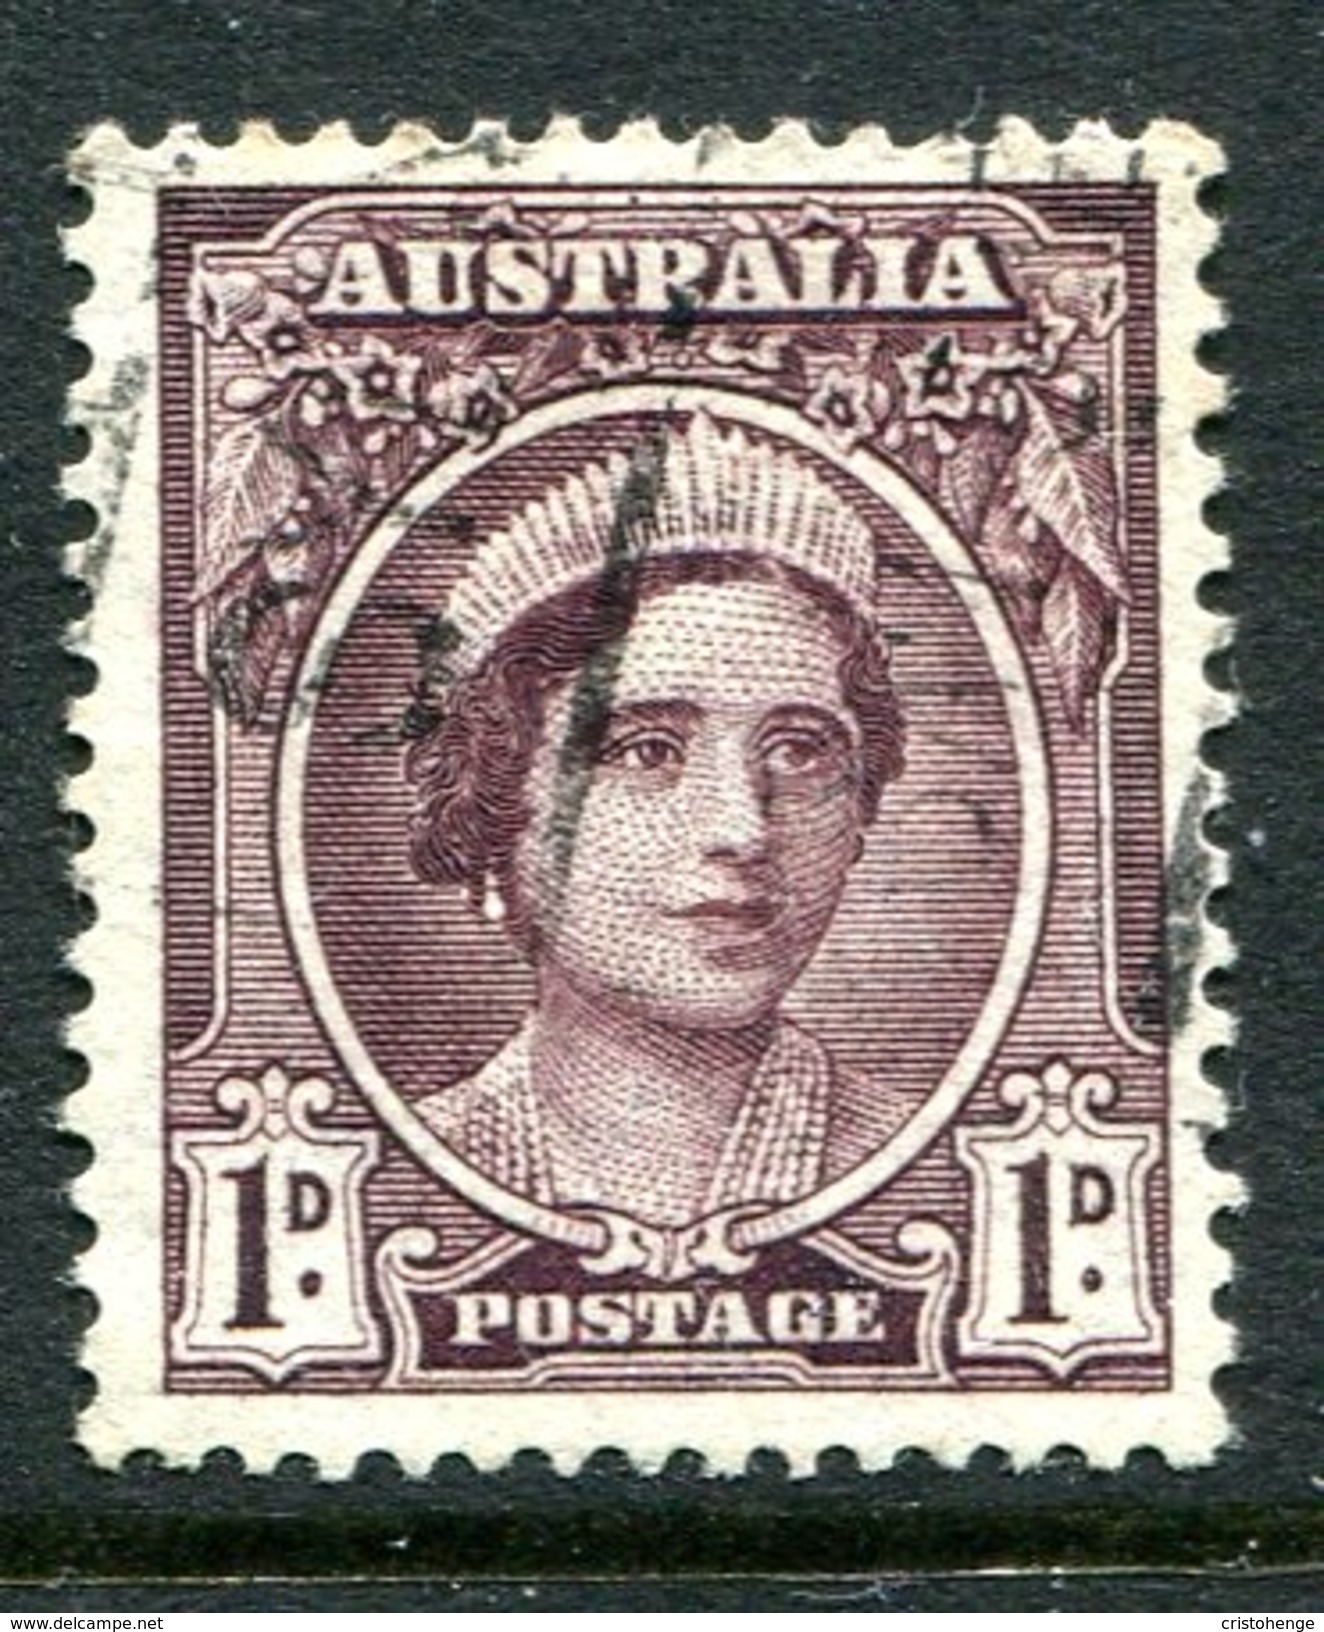 Australia 1942-50 KGVI Definitives - 1d Queen Elizabeth Used (SG 203) - Used Stamps